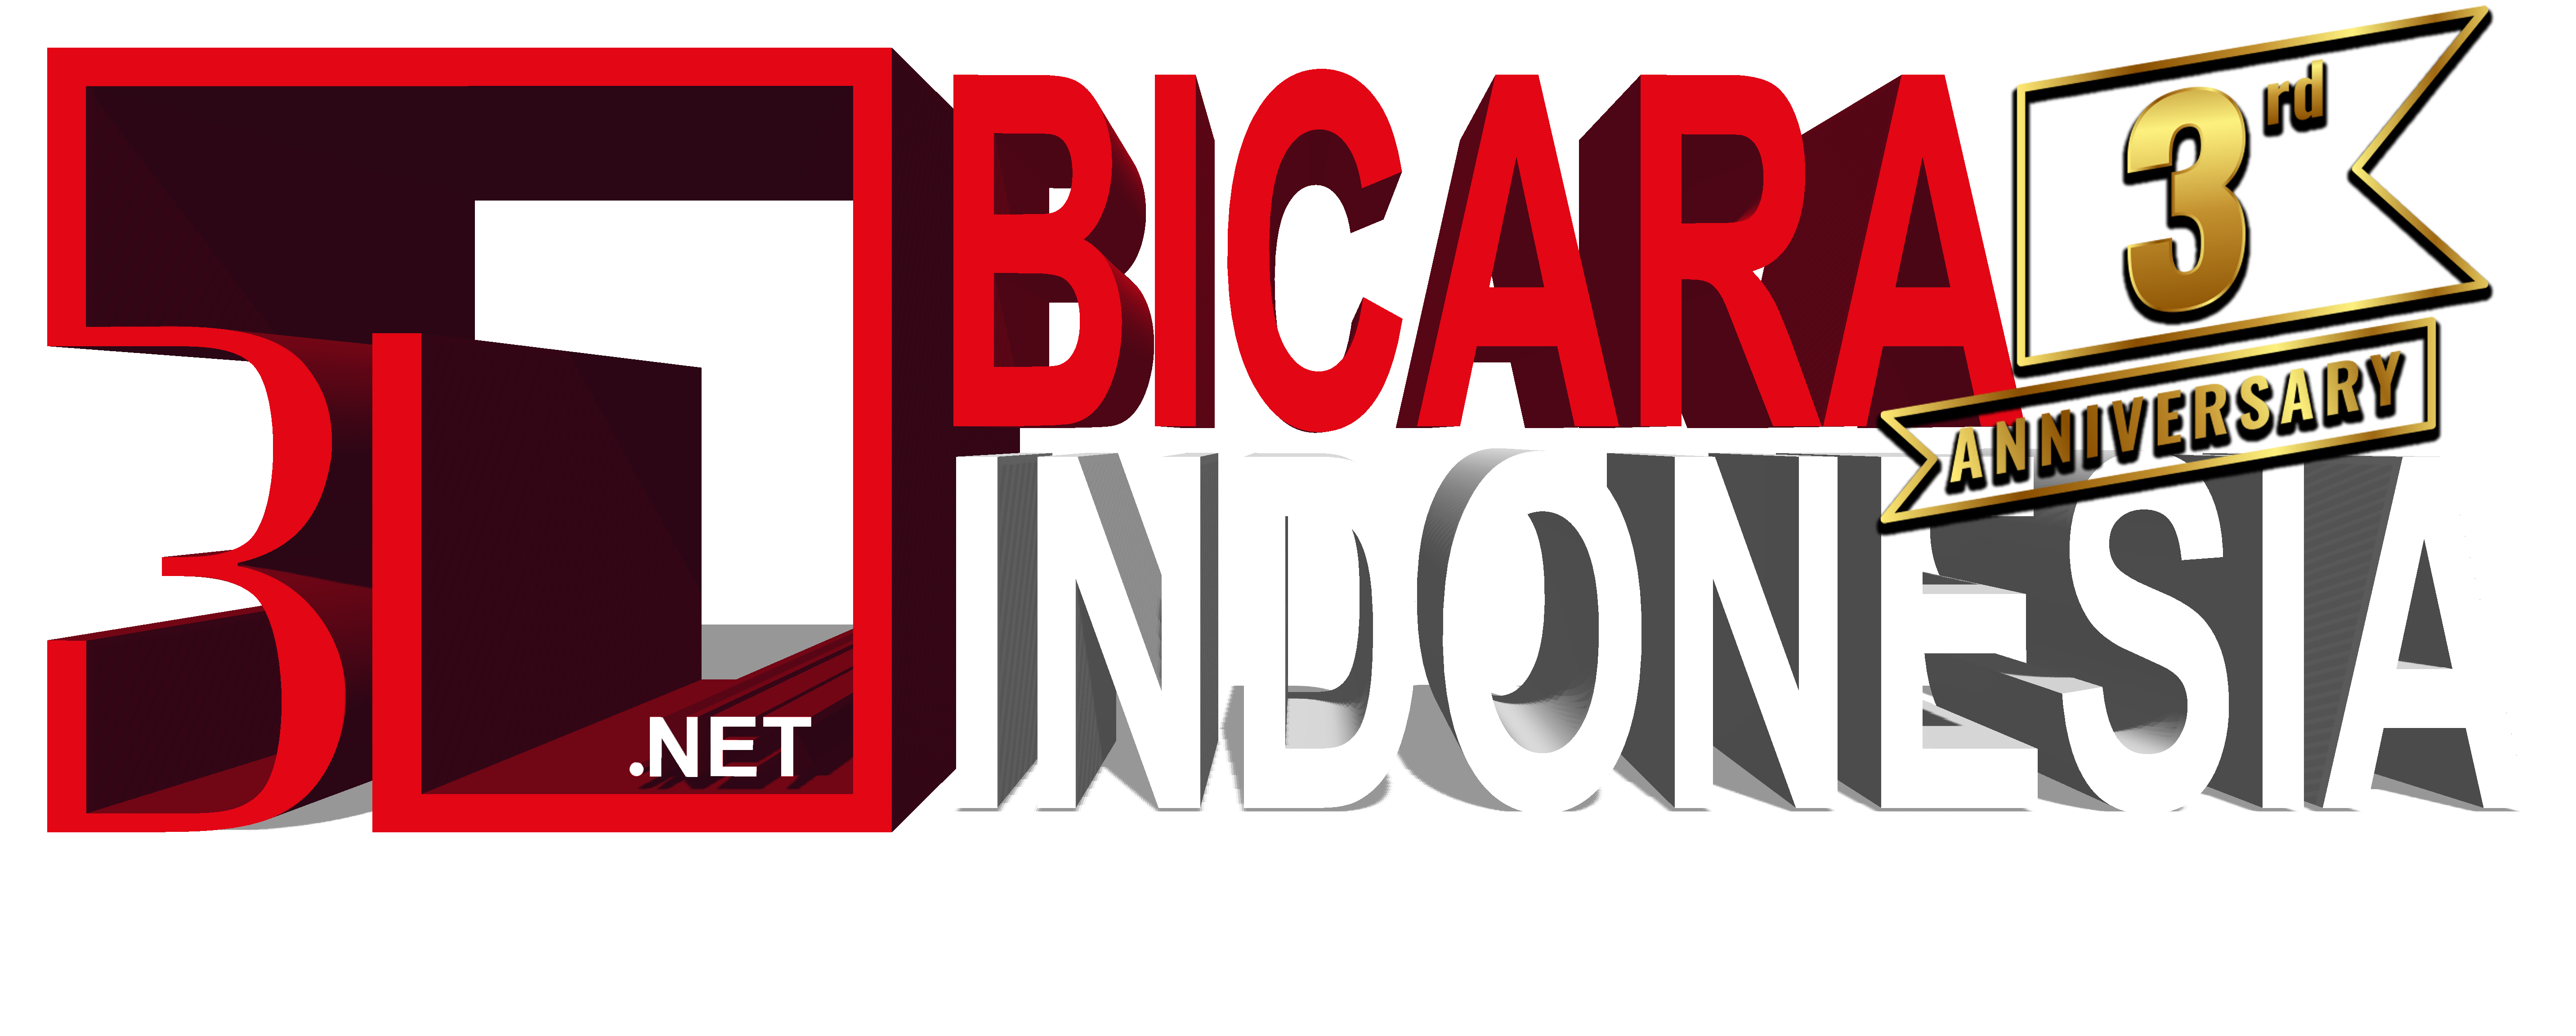 BicaraIndonesia.net